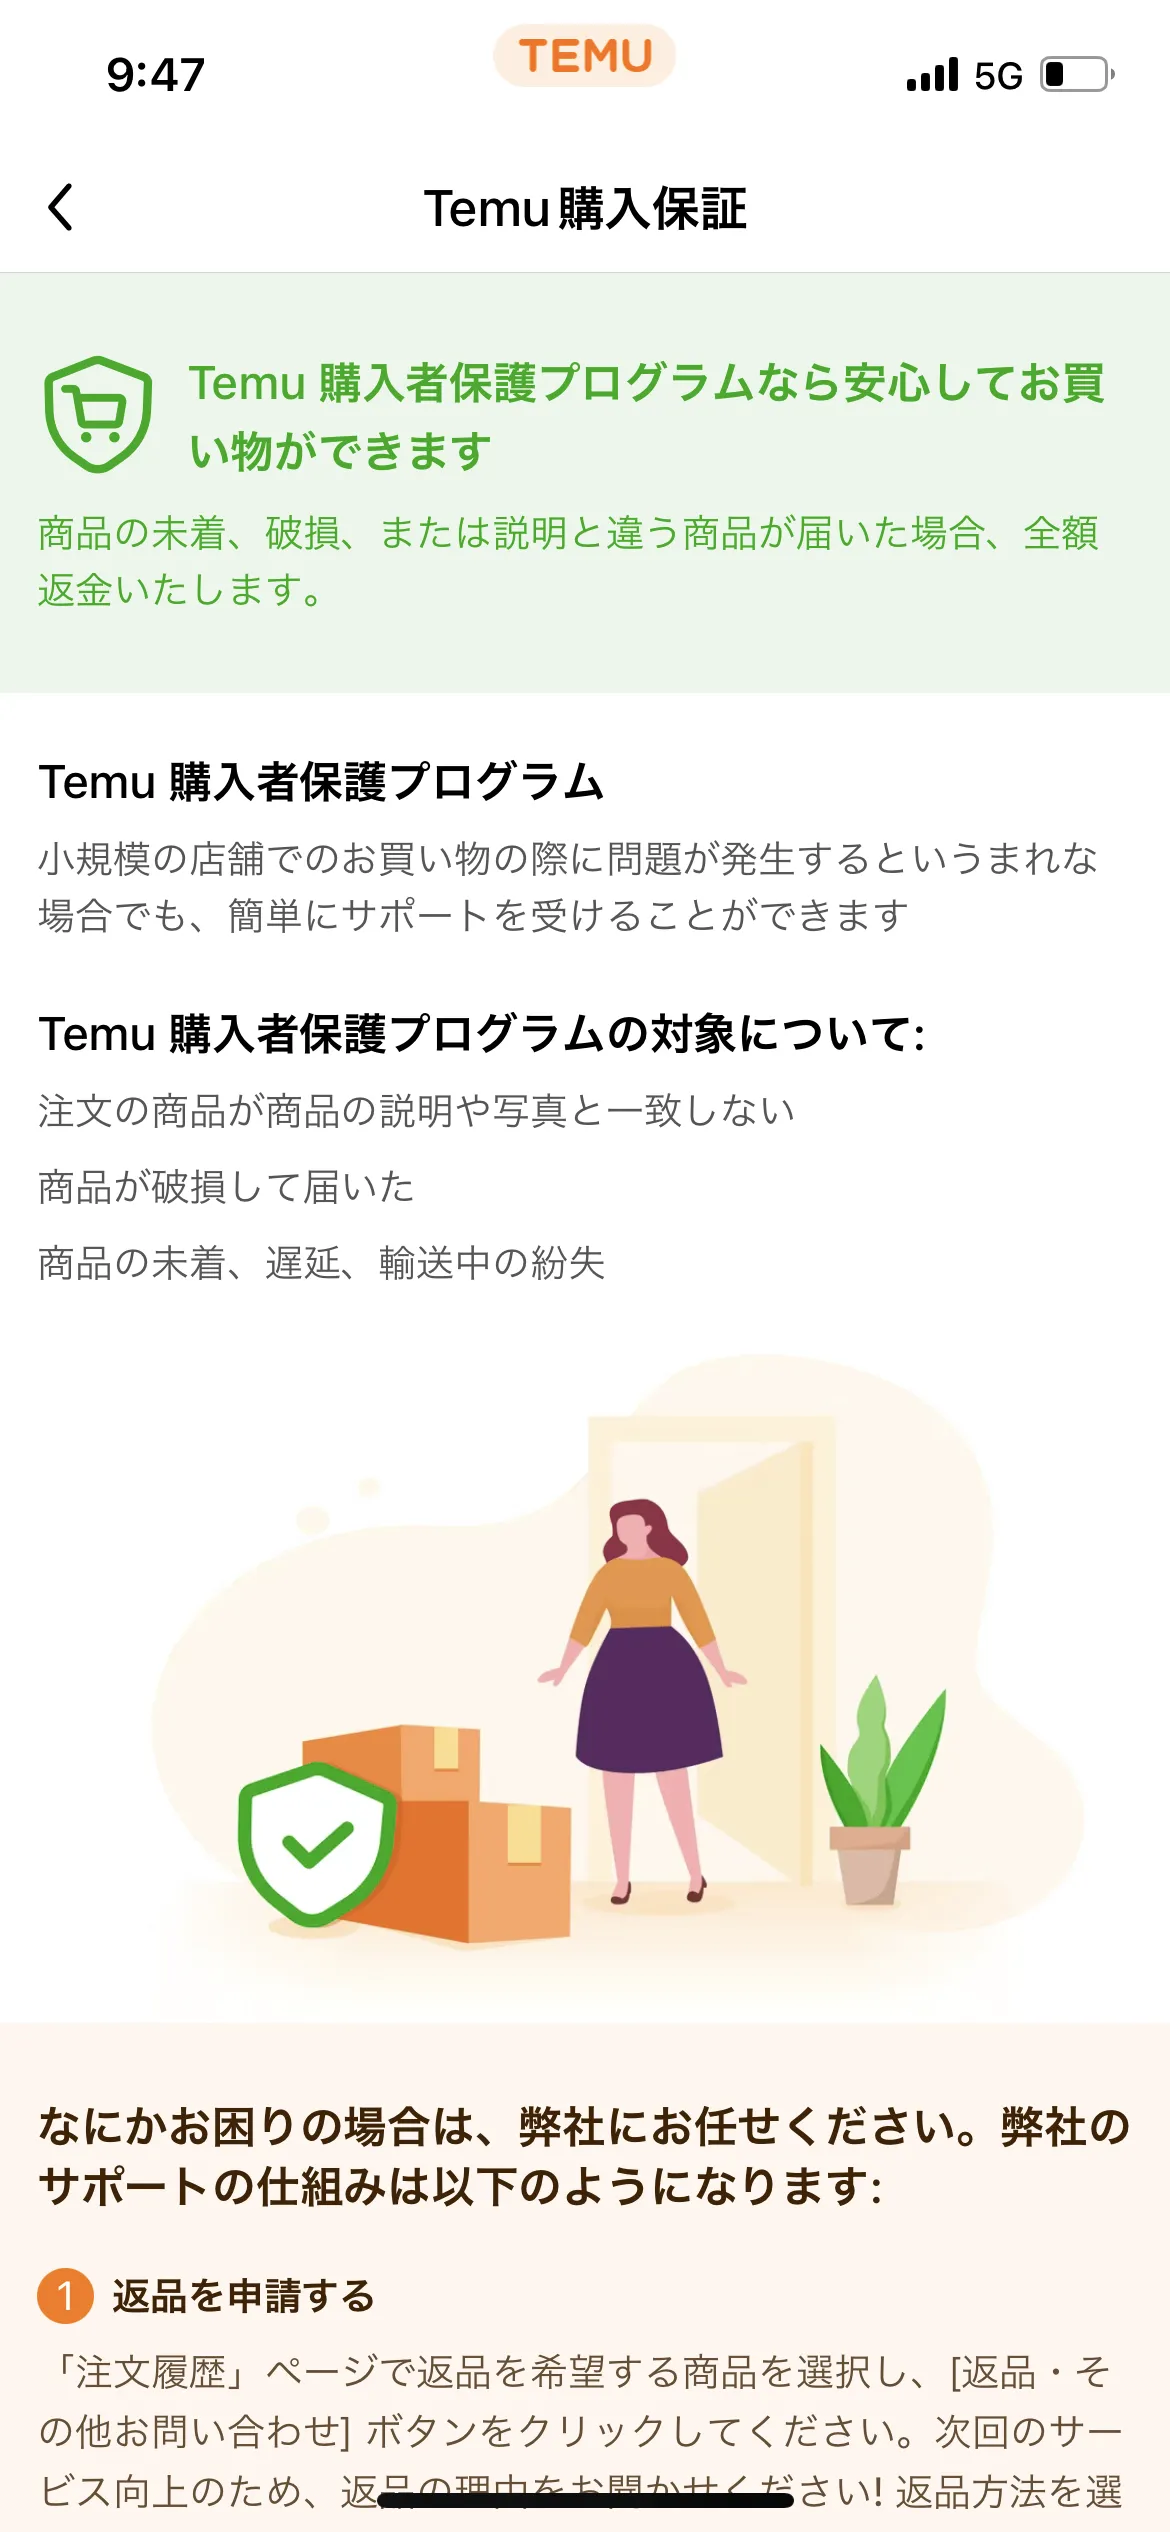 Temu ホーム screen